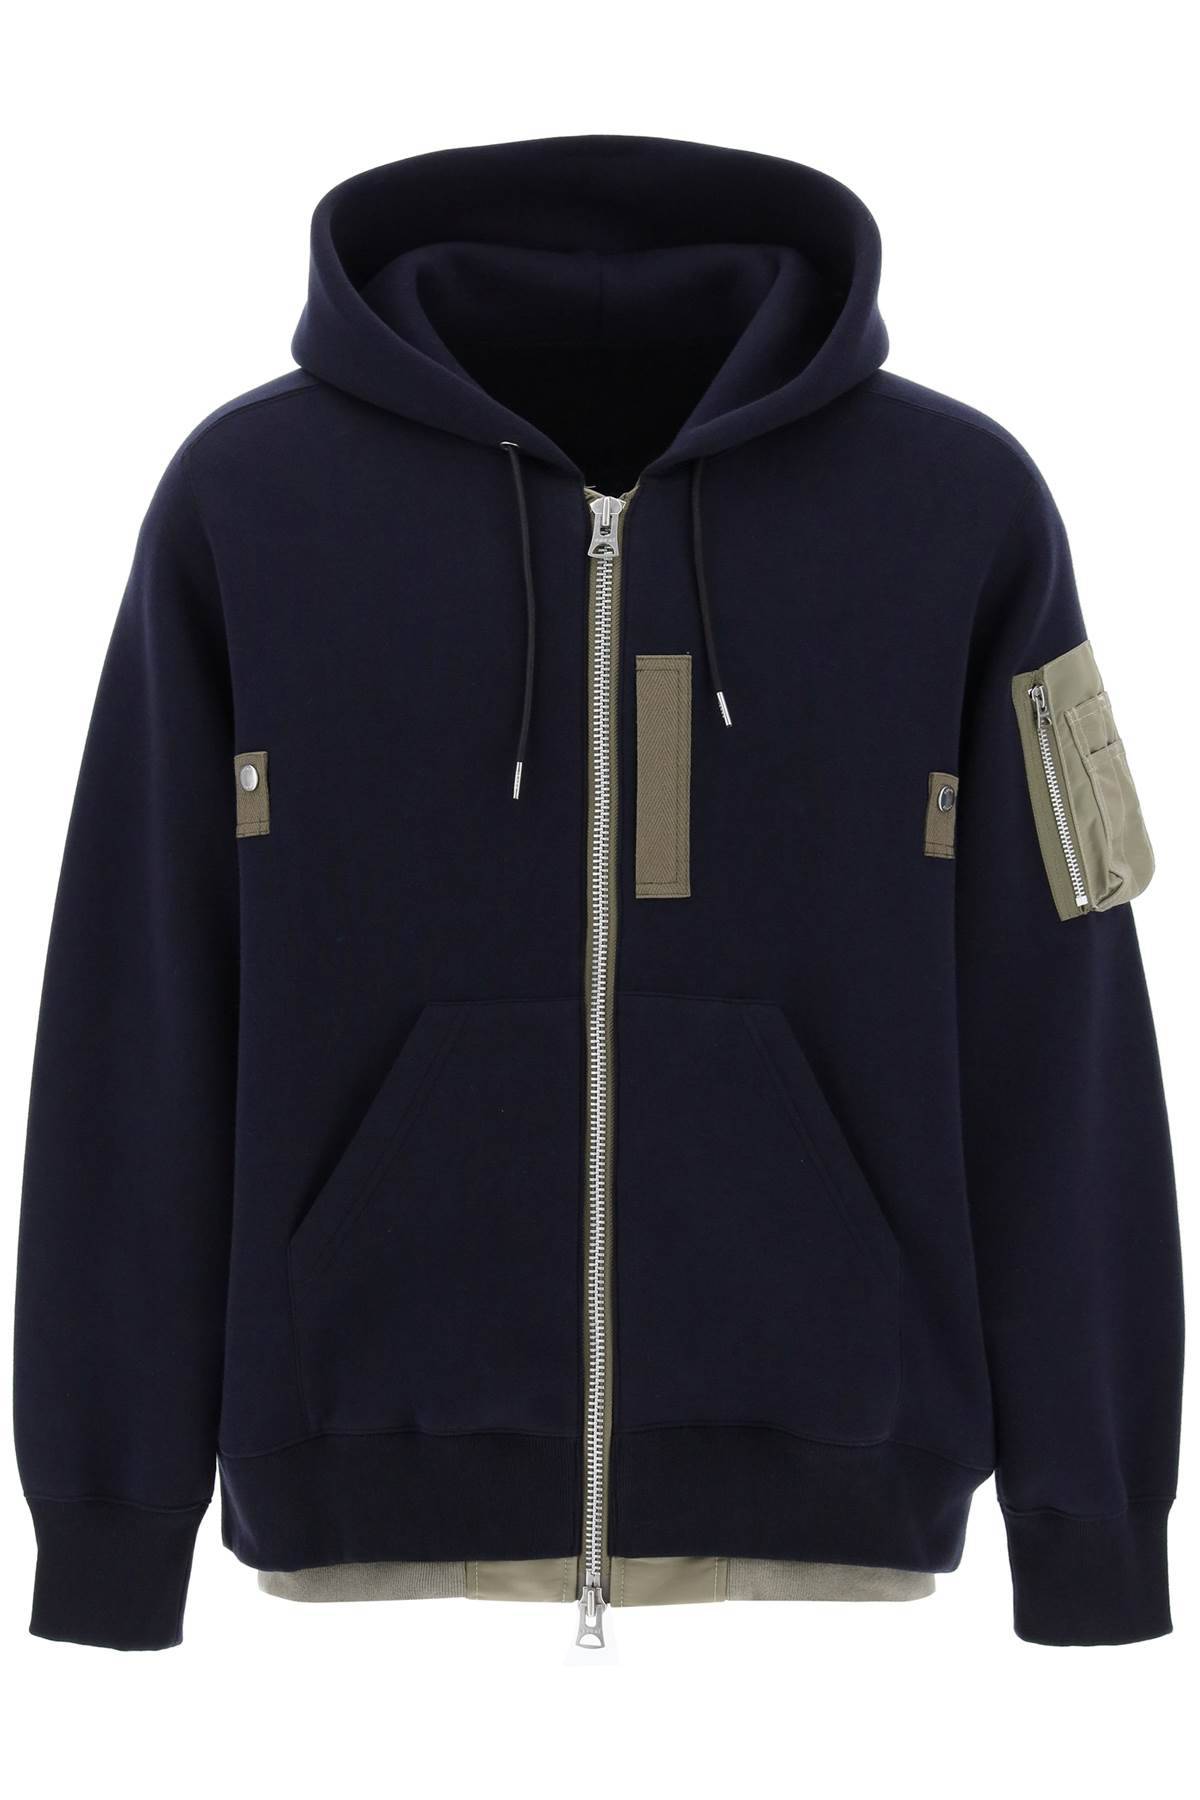 Sacai SACAI full zip hoodie with contrast trims